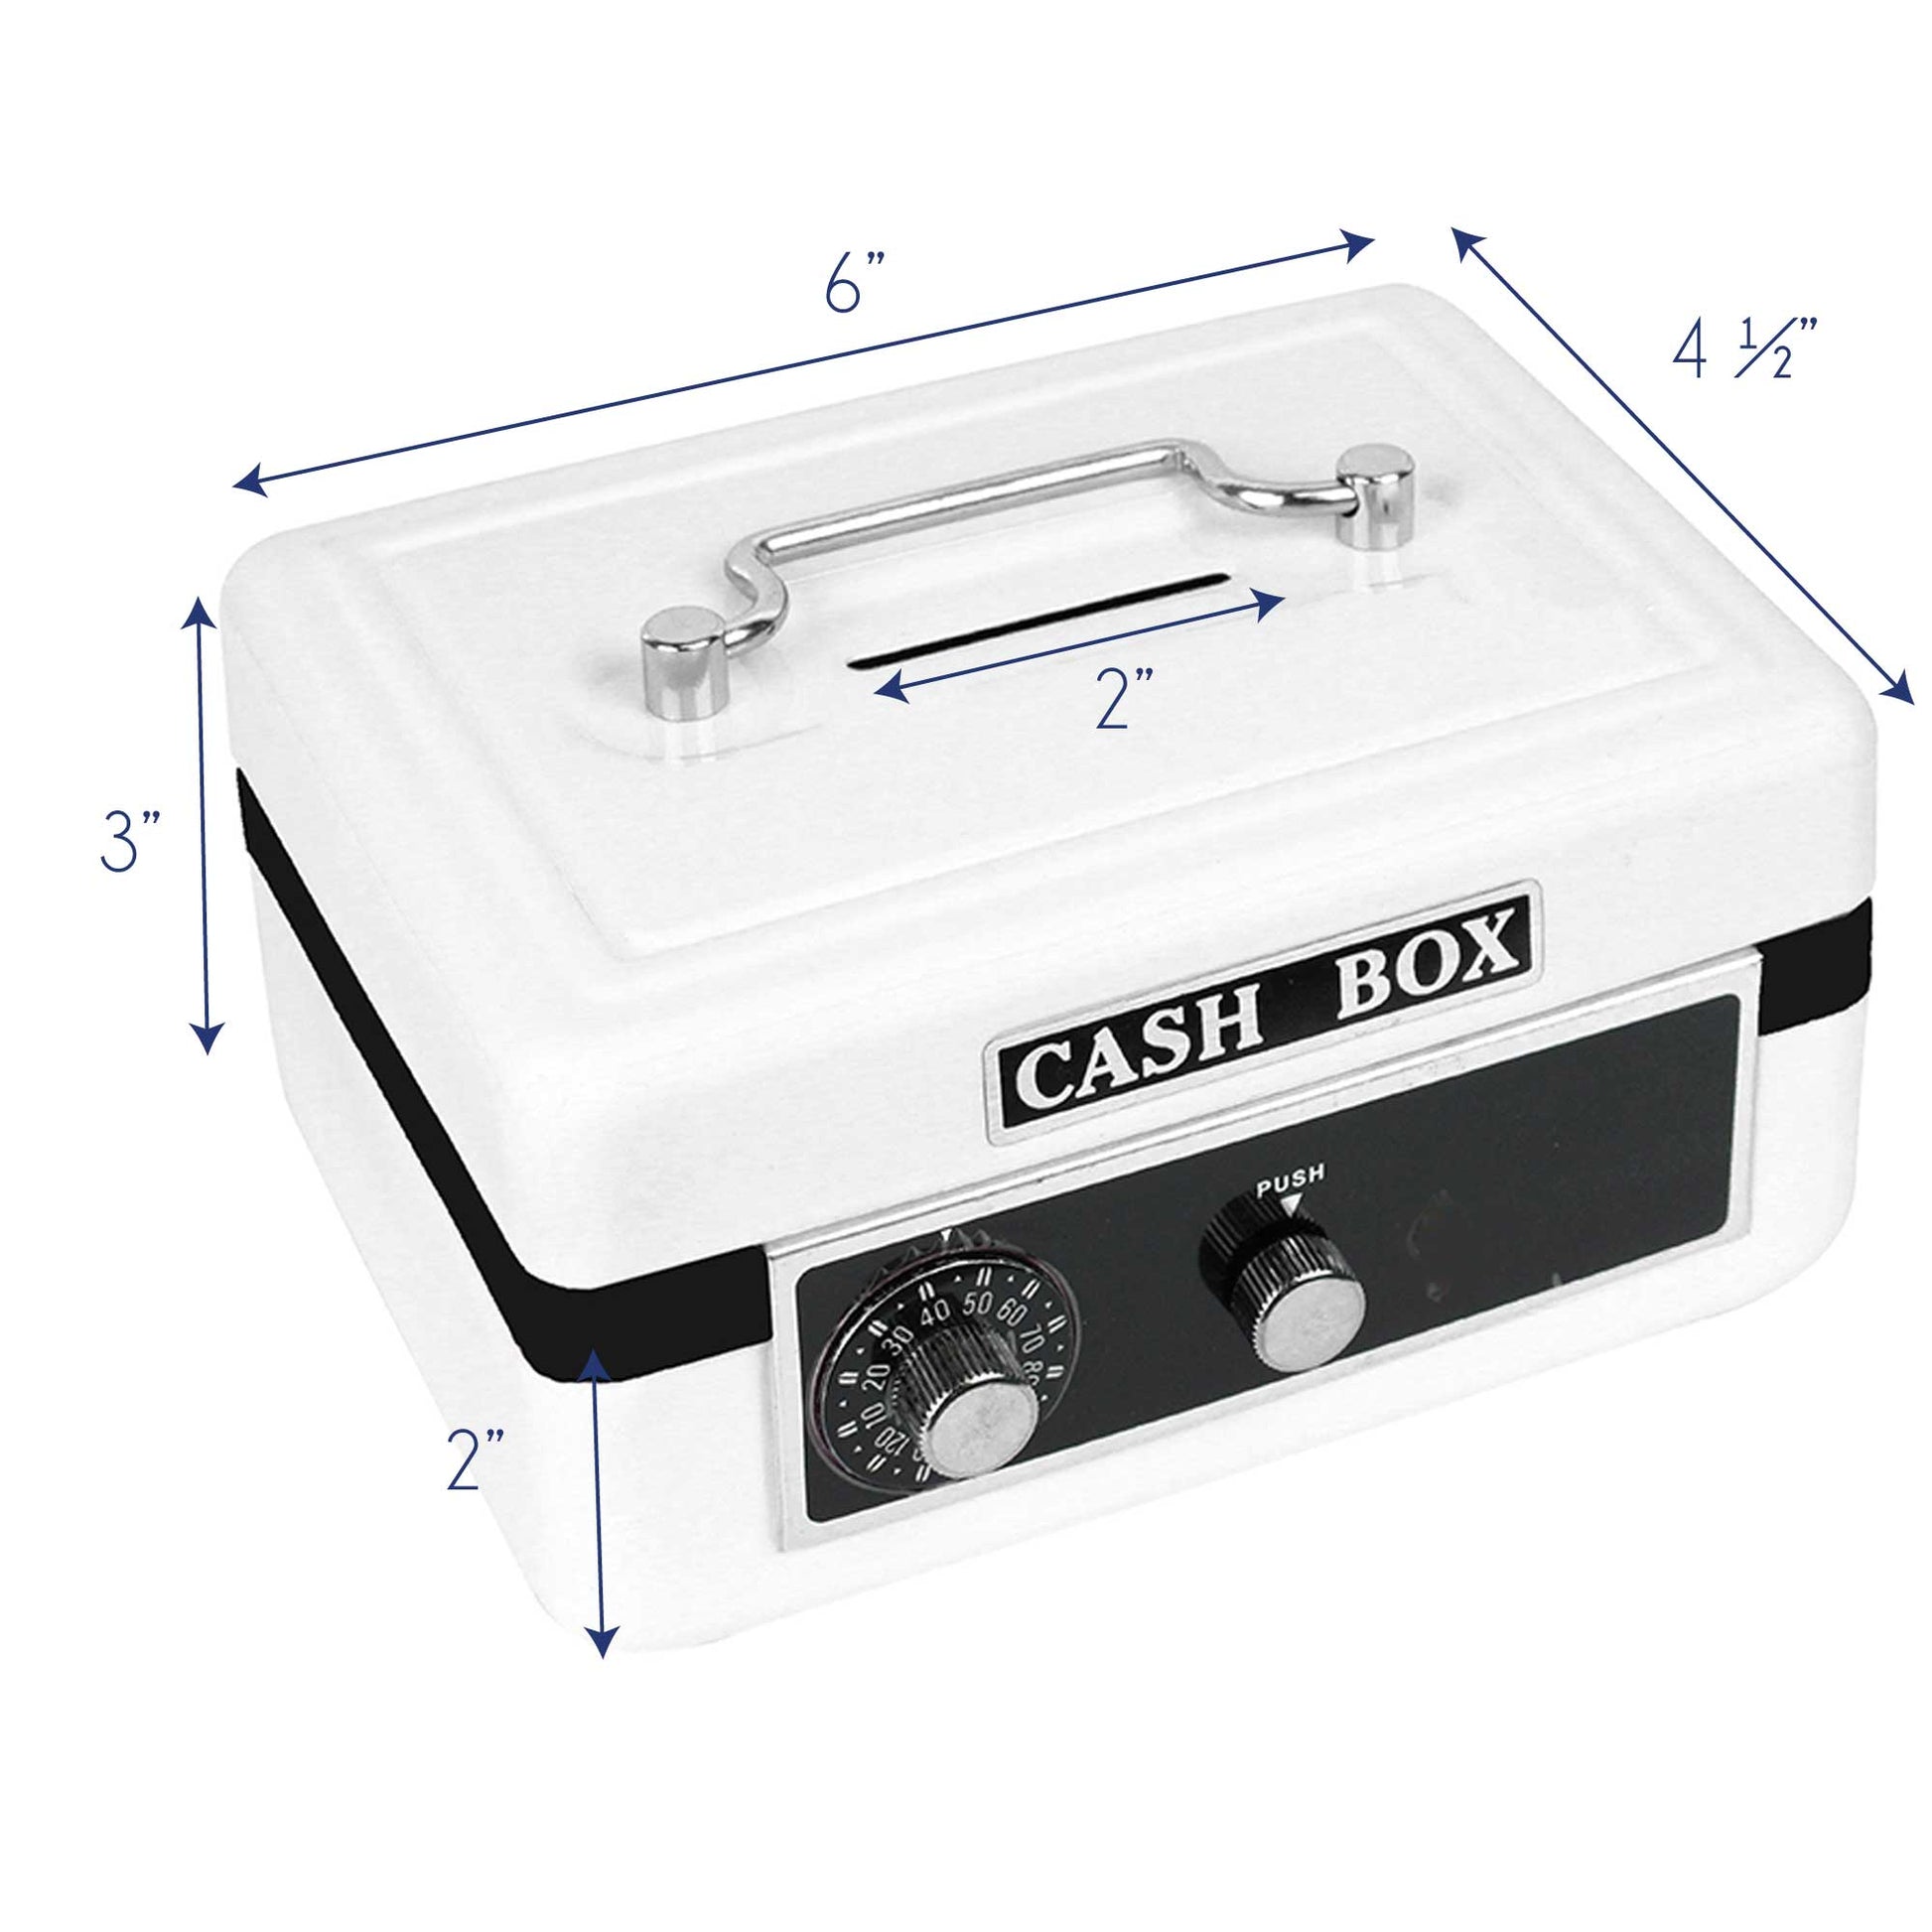 Personalized White Cash Box with Basketballs design